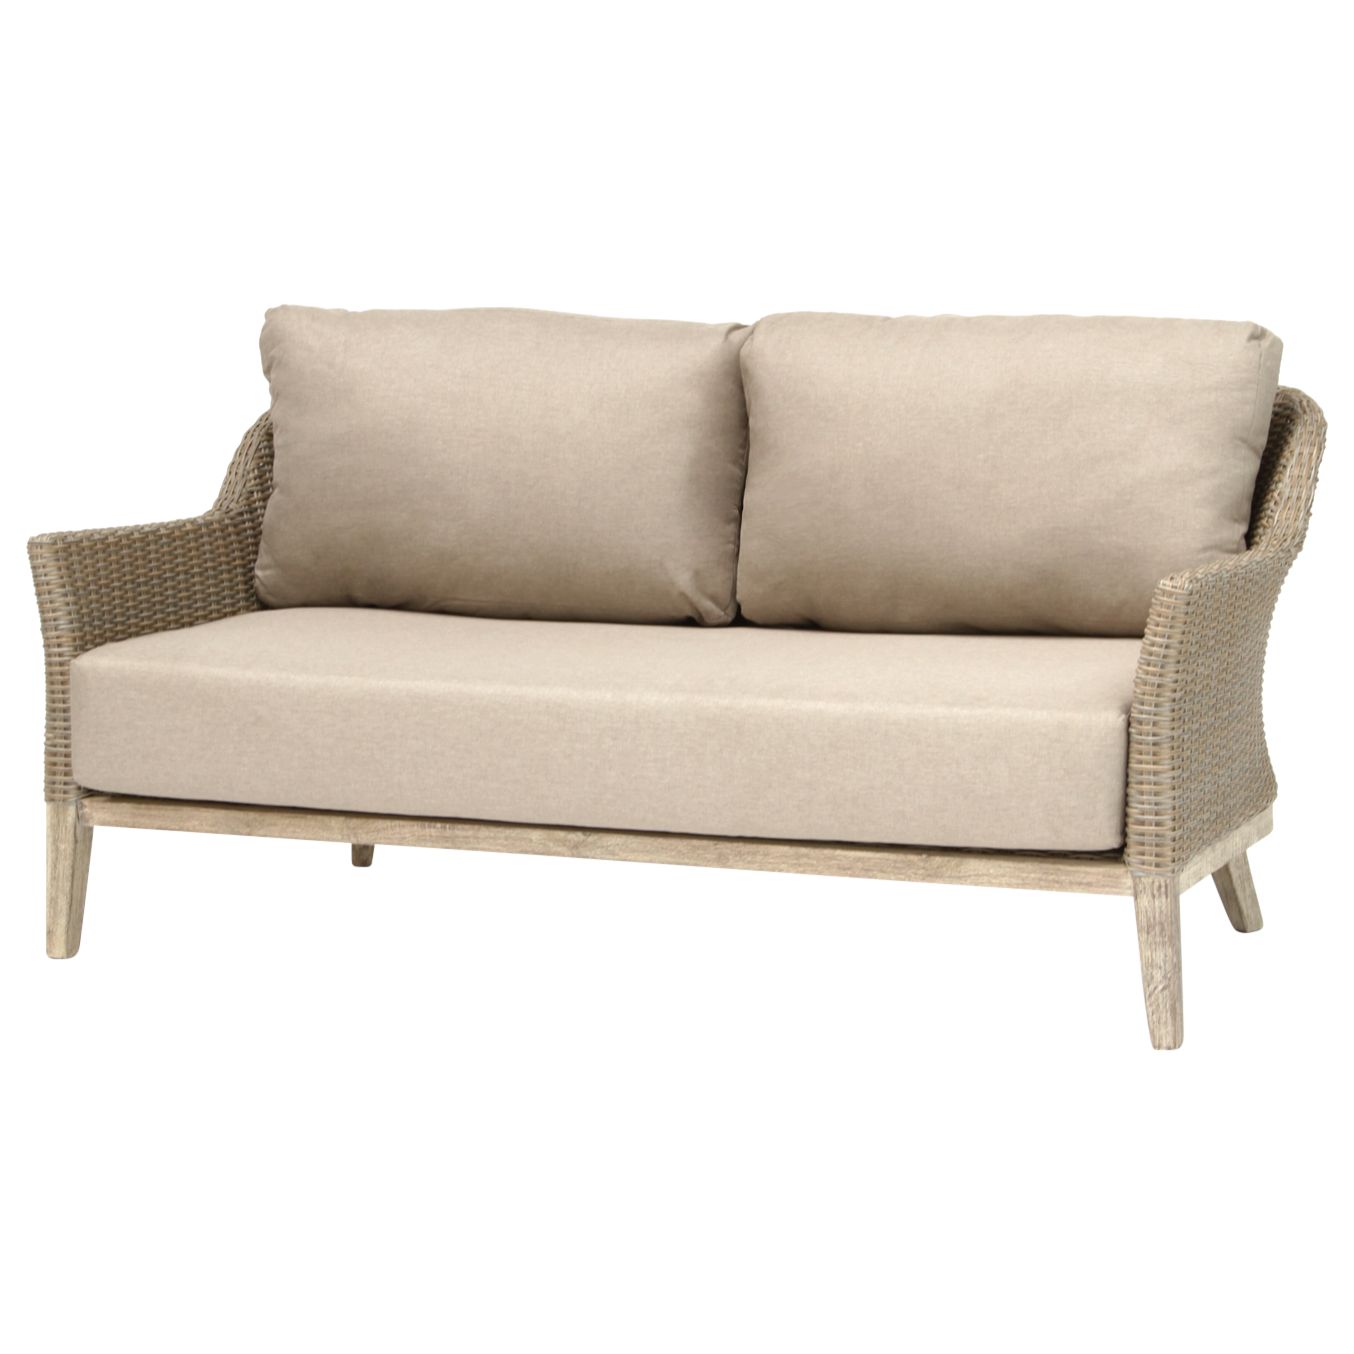 Photo of Kettler cora lounging 3 seater sofa fsc-certified -acacia wood- smoke white